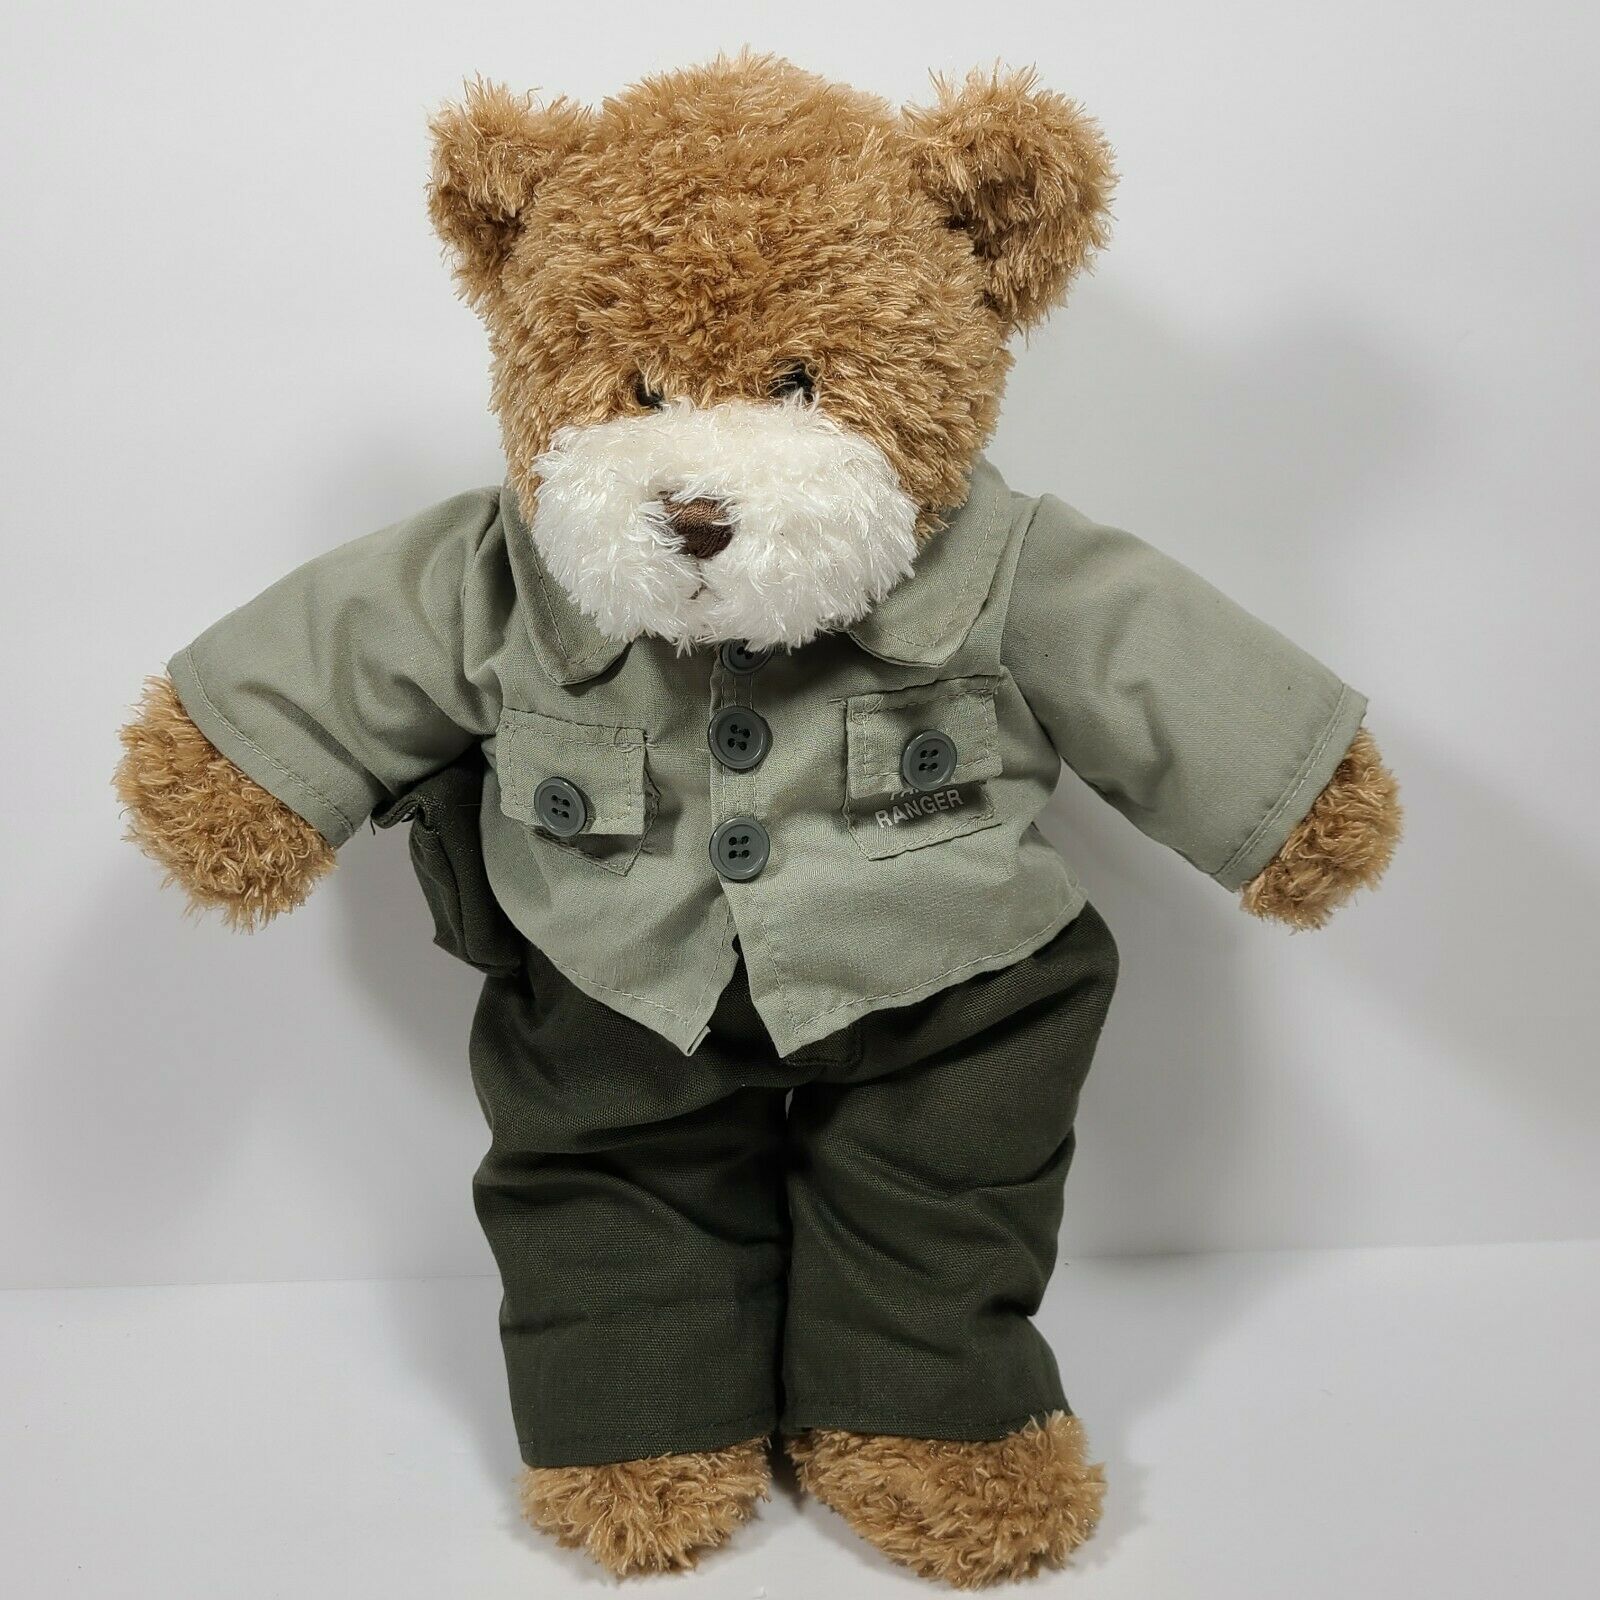 Ganz Heritage Collection Park Ranger Teddy Bear Plush In Ranger Uniform